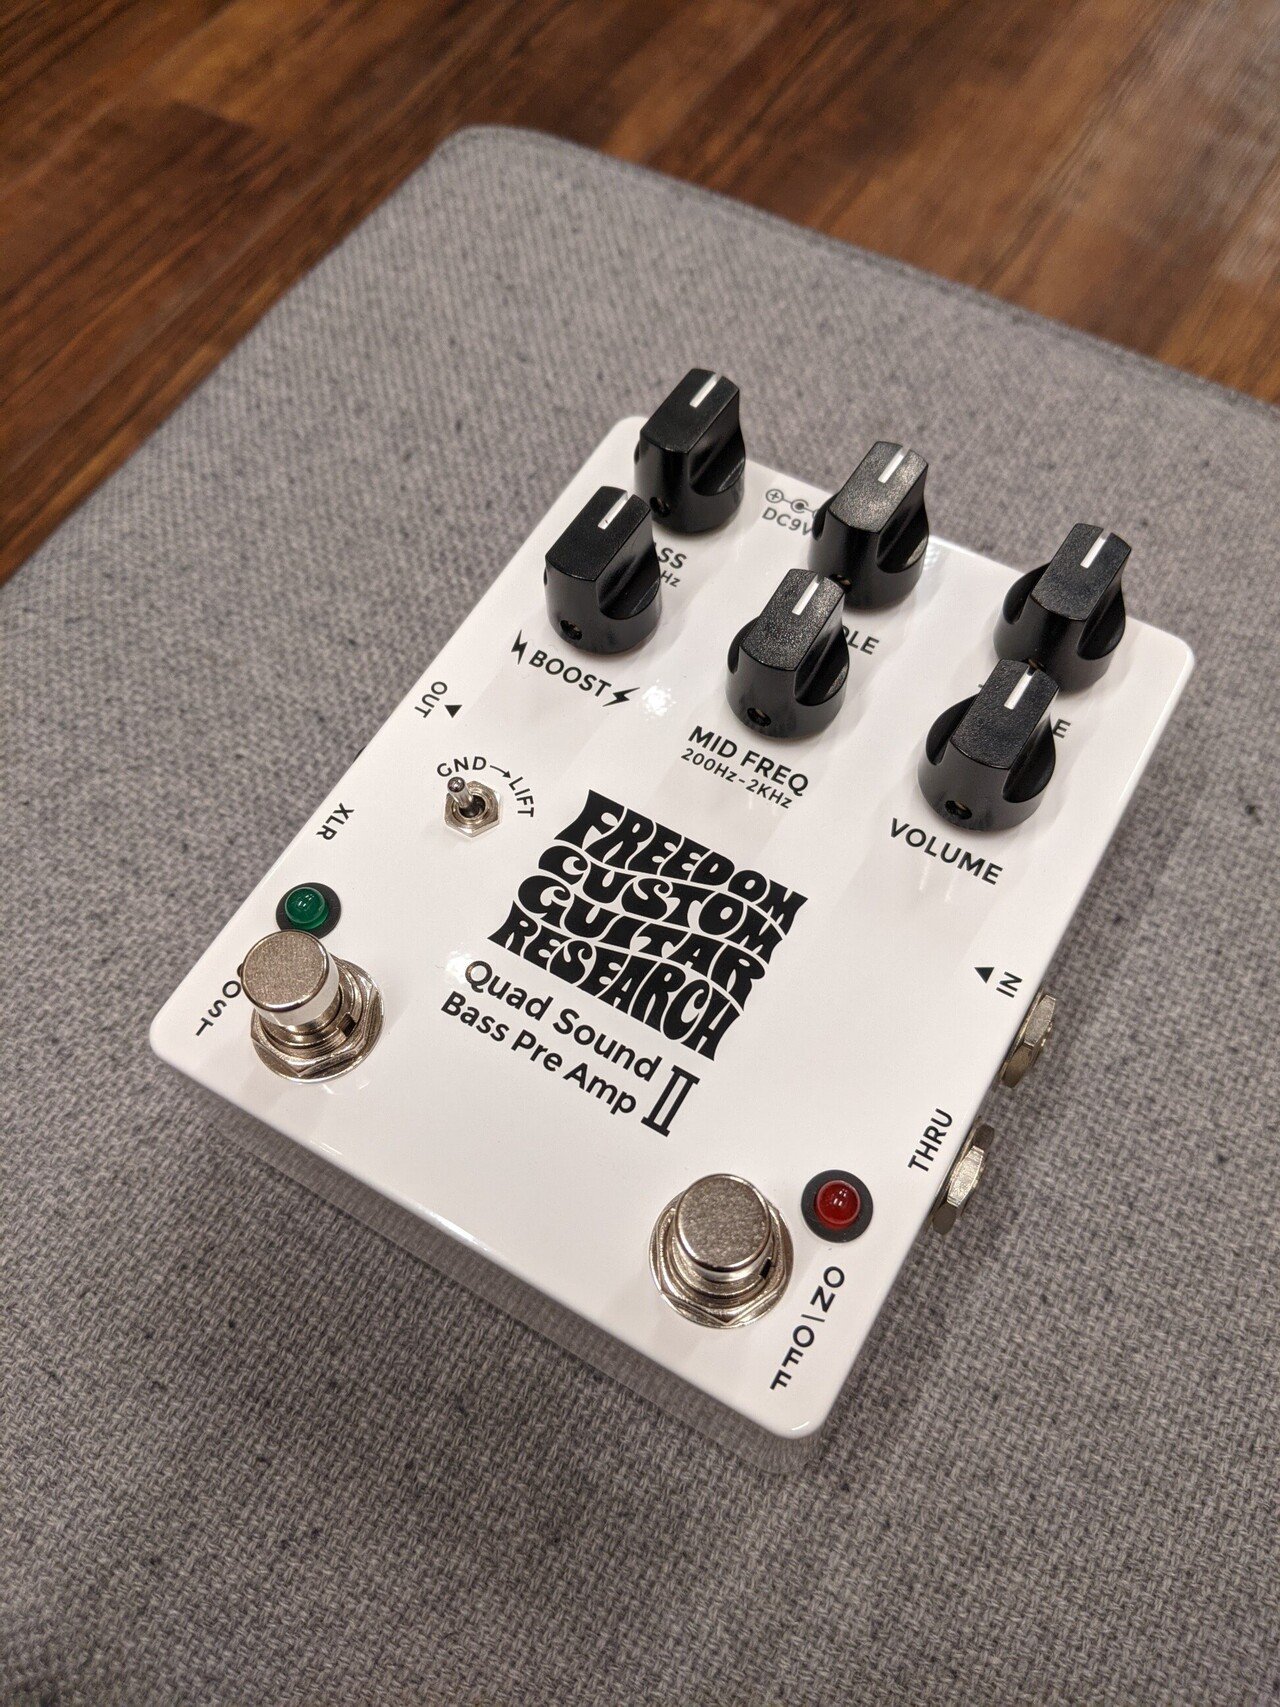 Freedom Custom Guitar Research “Quad Sound Bass Pre Amp II ...